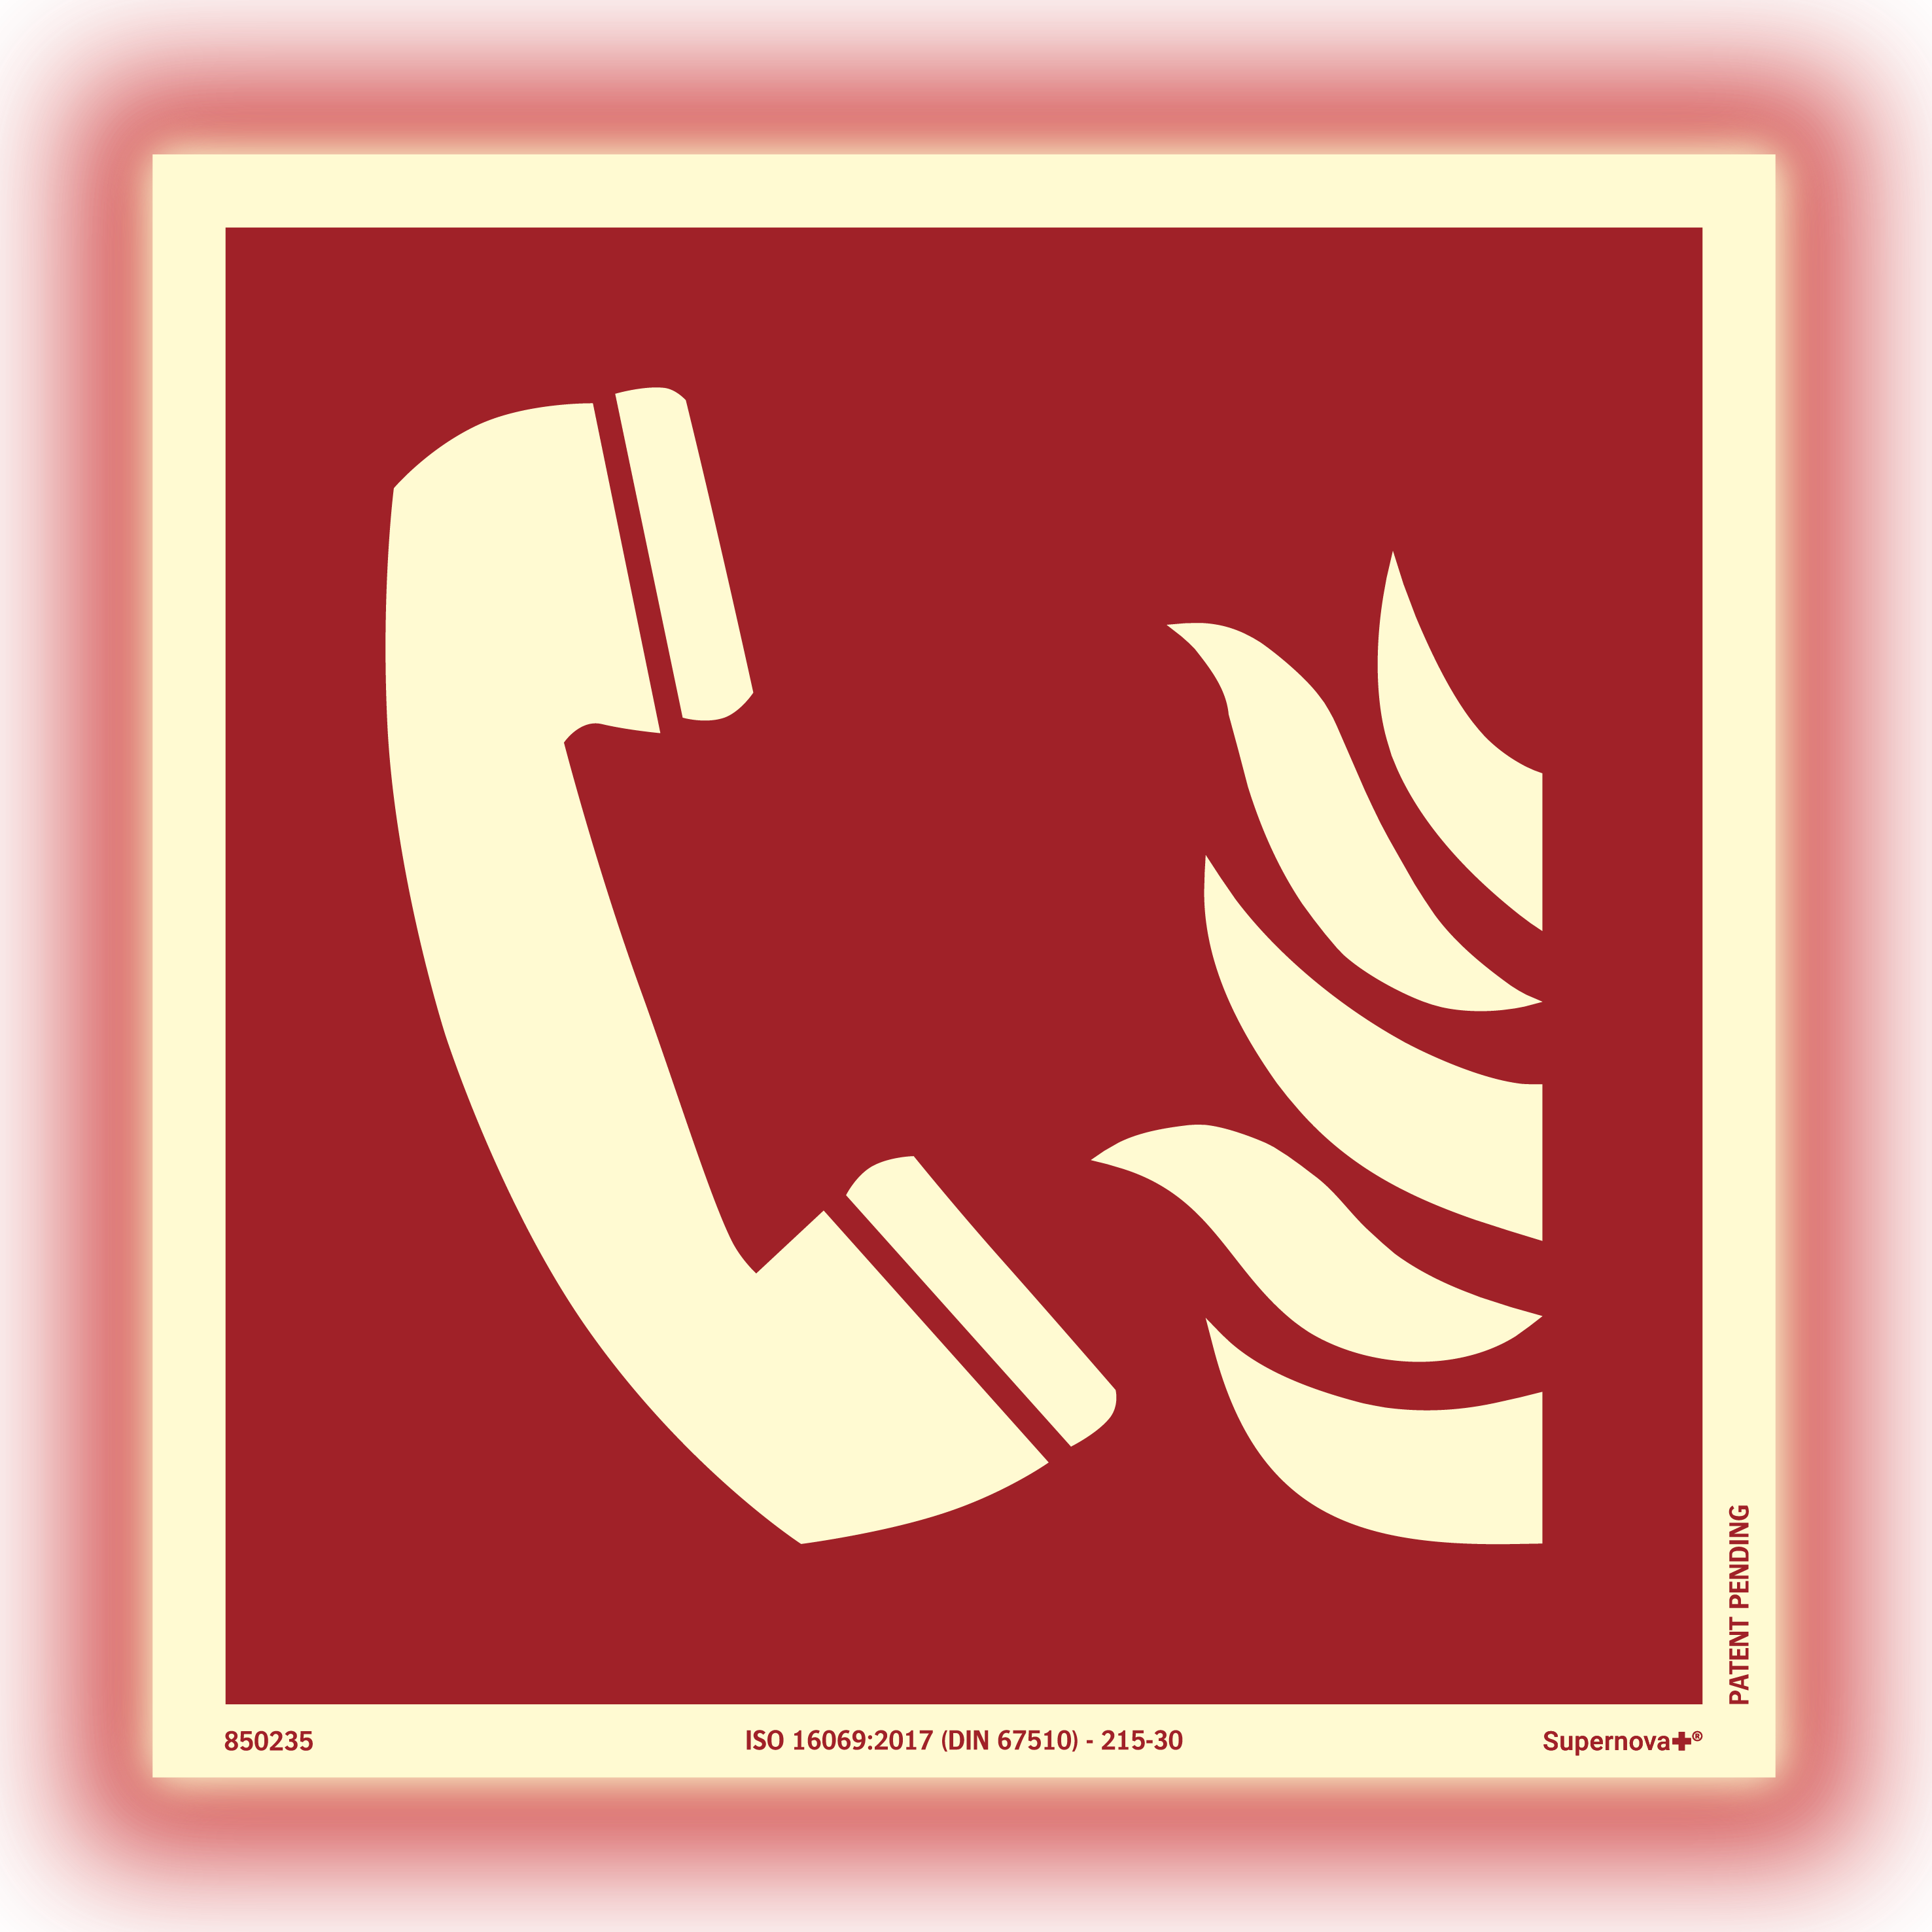 Supernova+® Fire emergency telephone